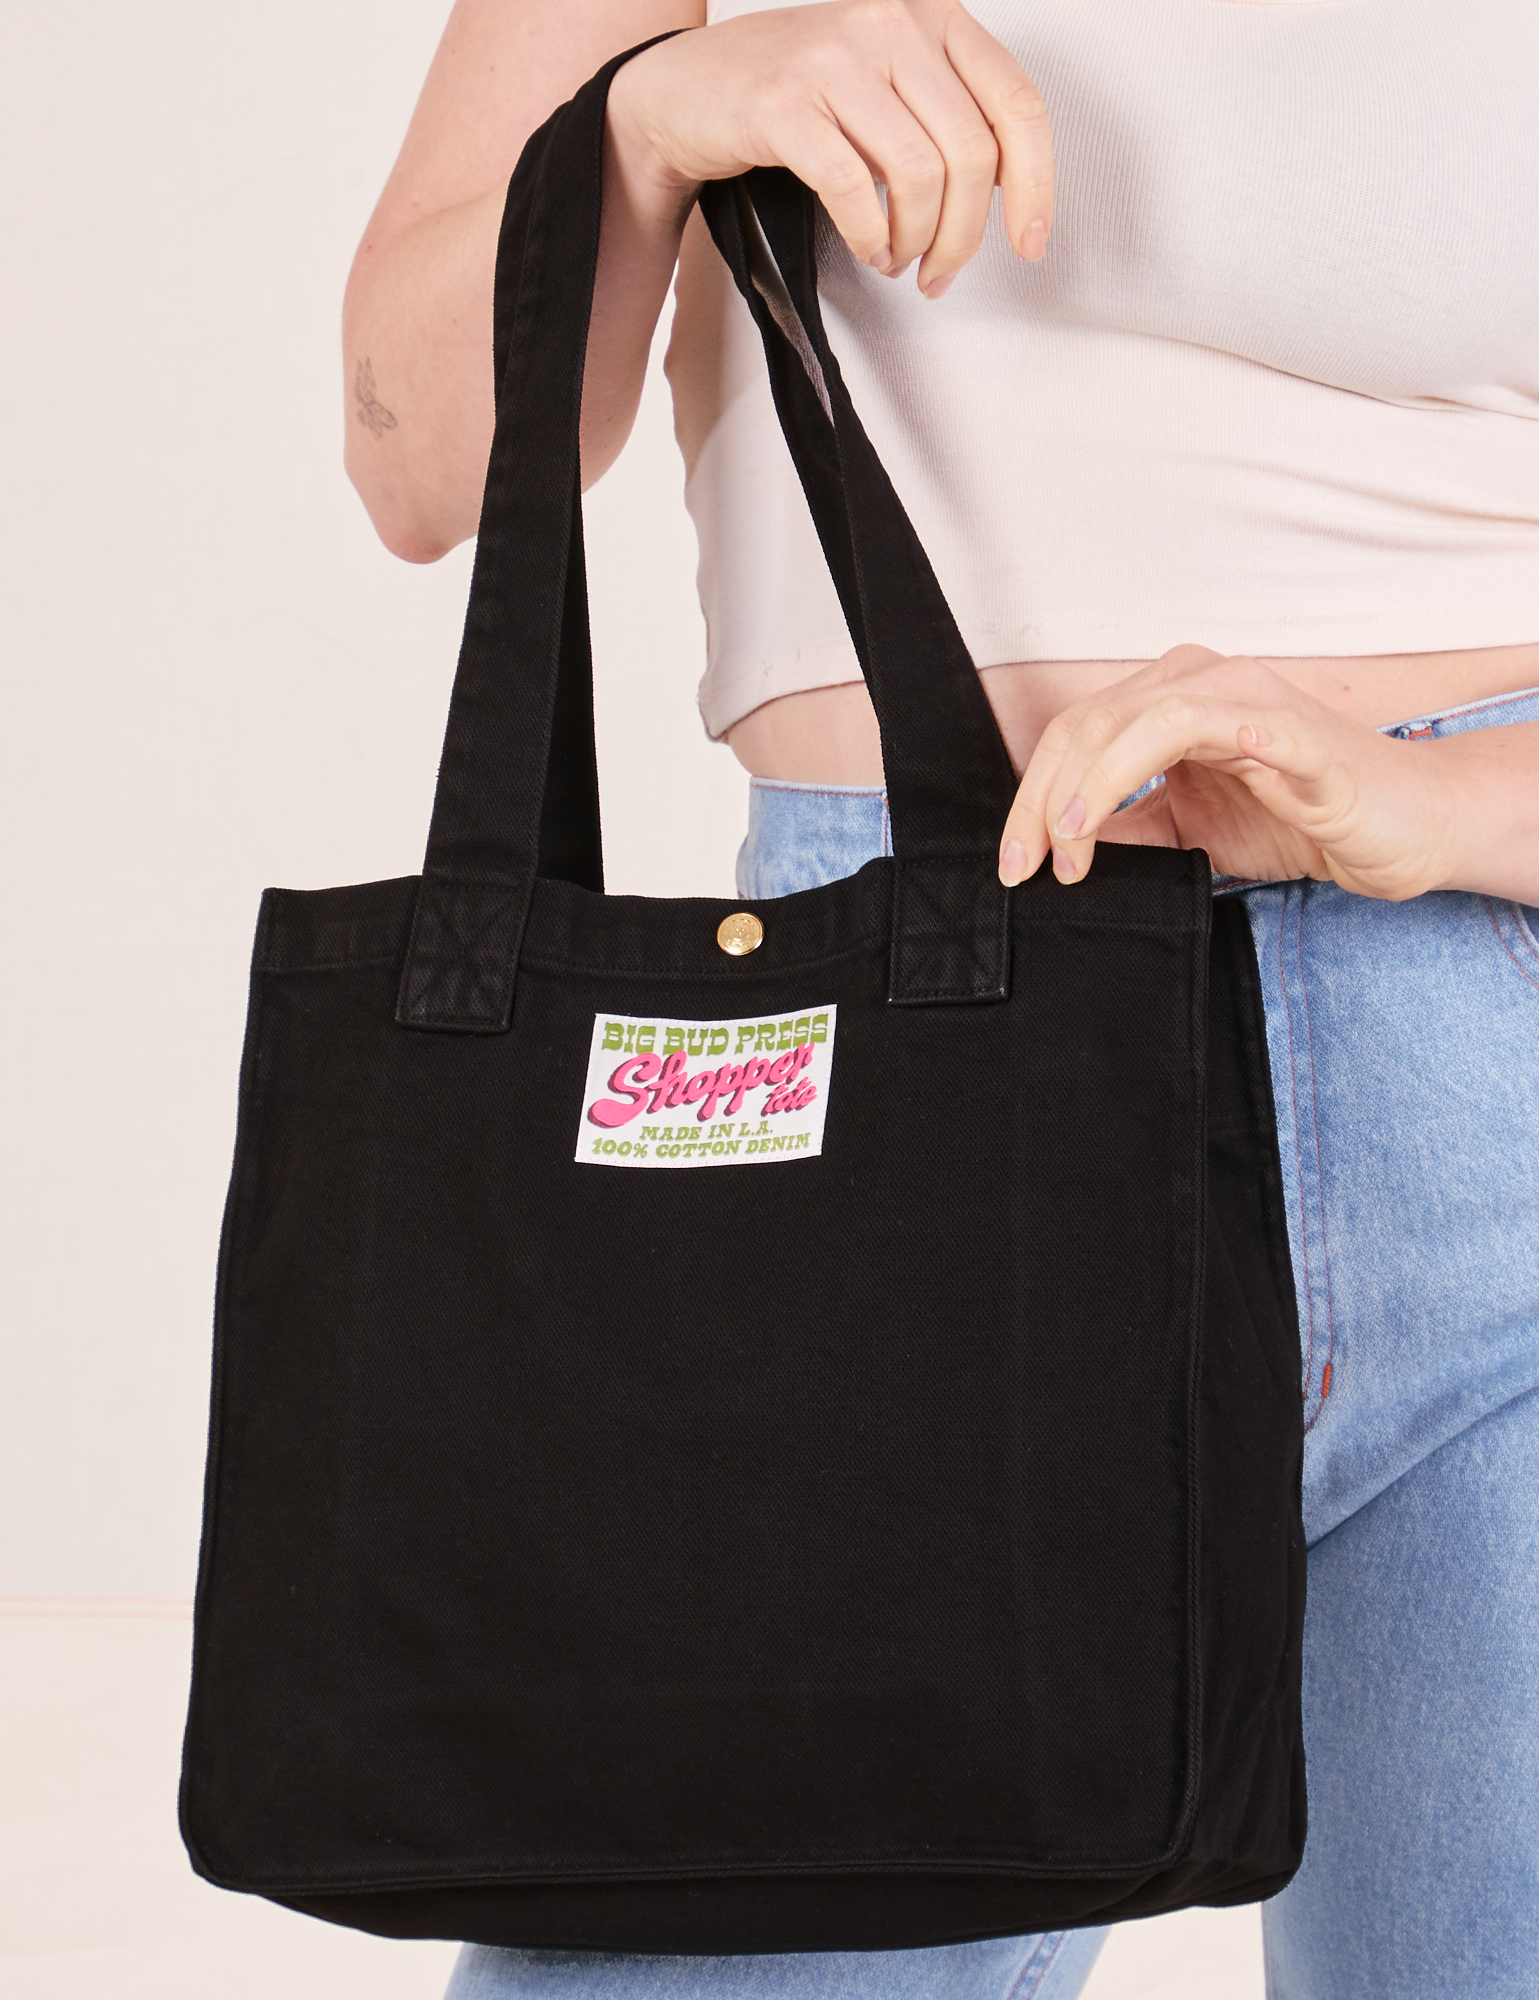 Shopper Tote Bag in black on Allison&#39;s arm